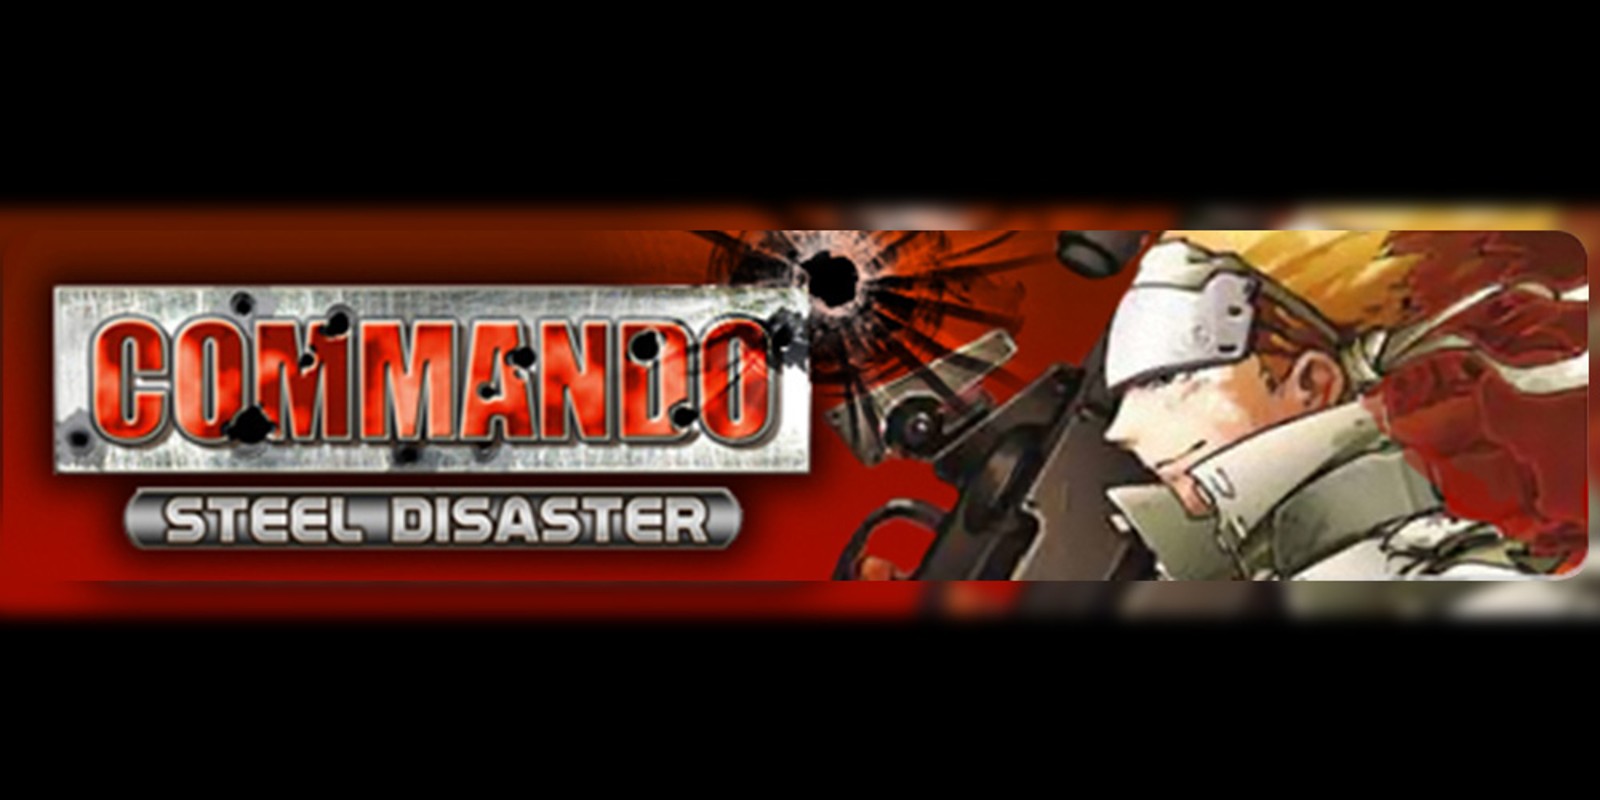 Commando: Steel Disaster